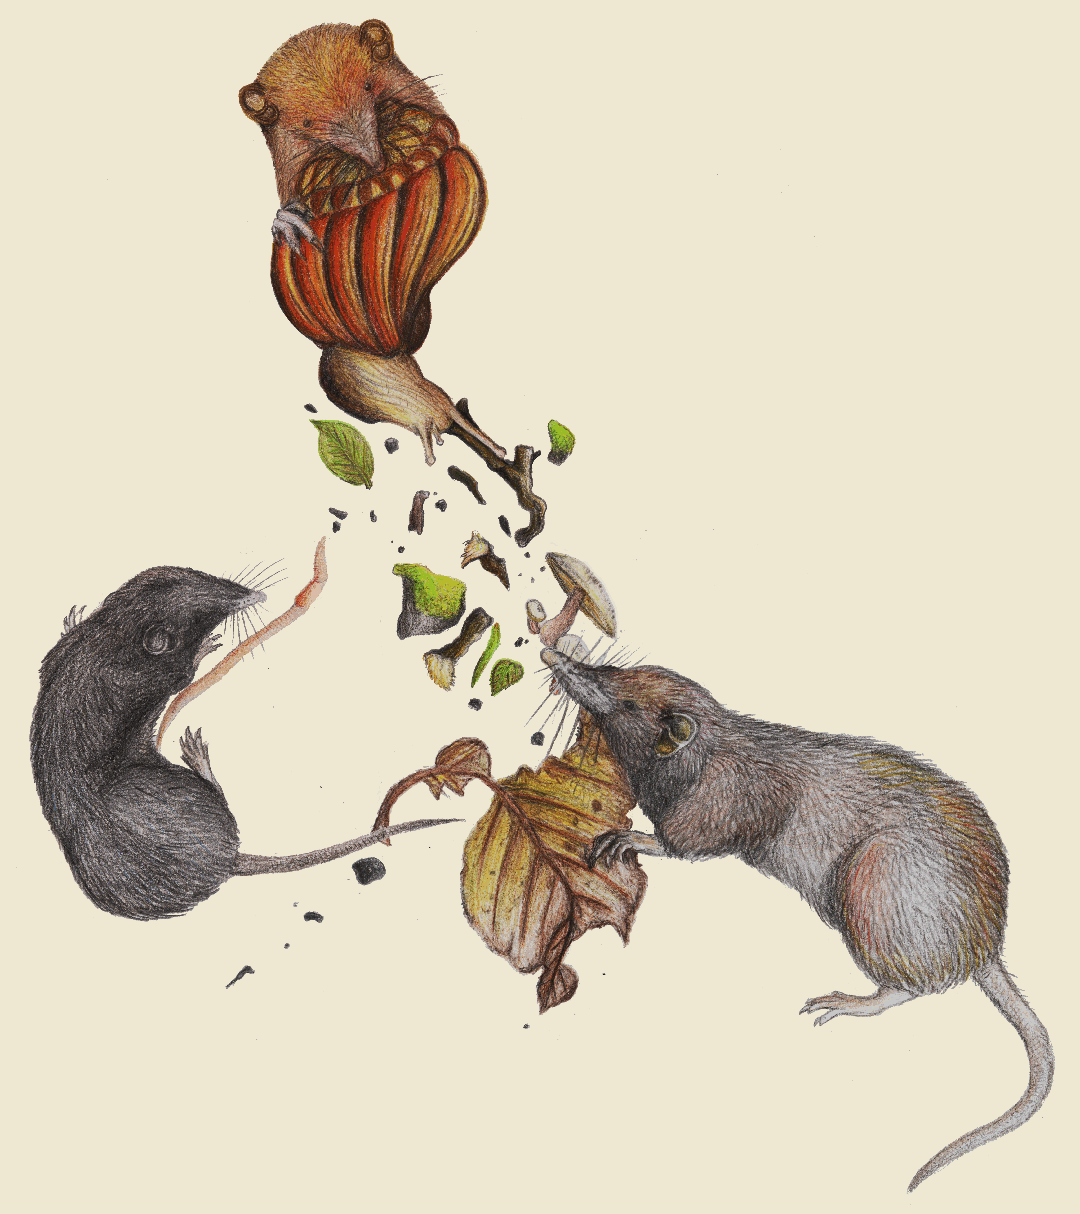 shrews eating Philippines